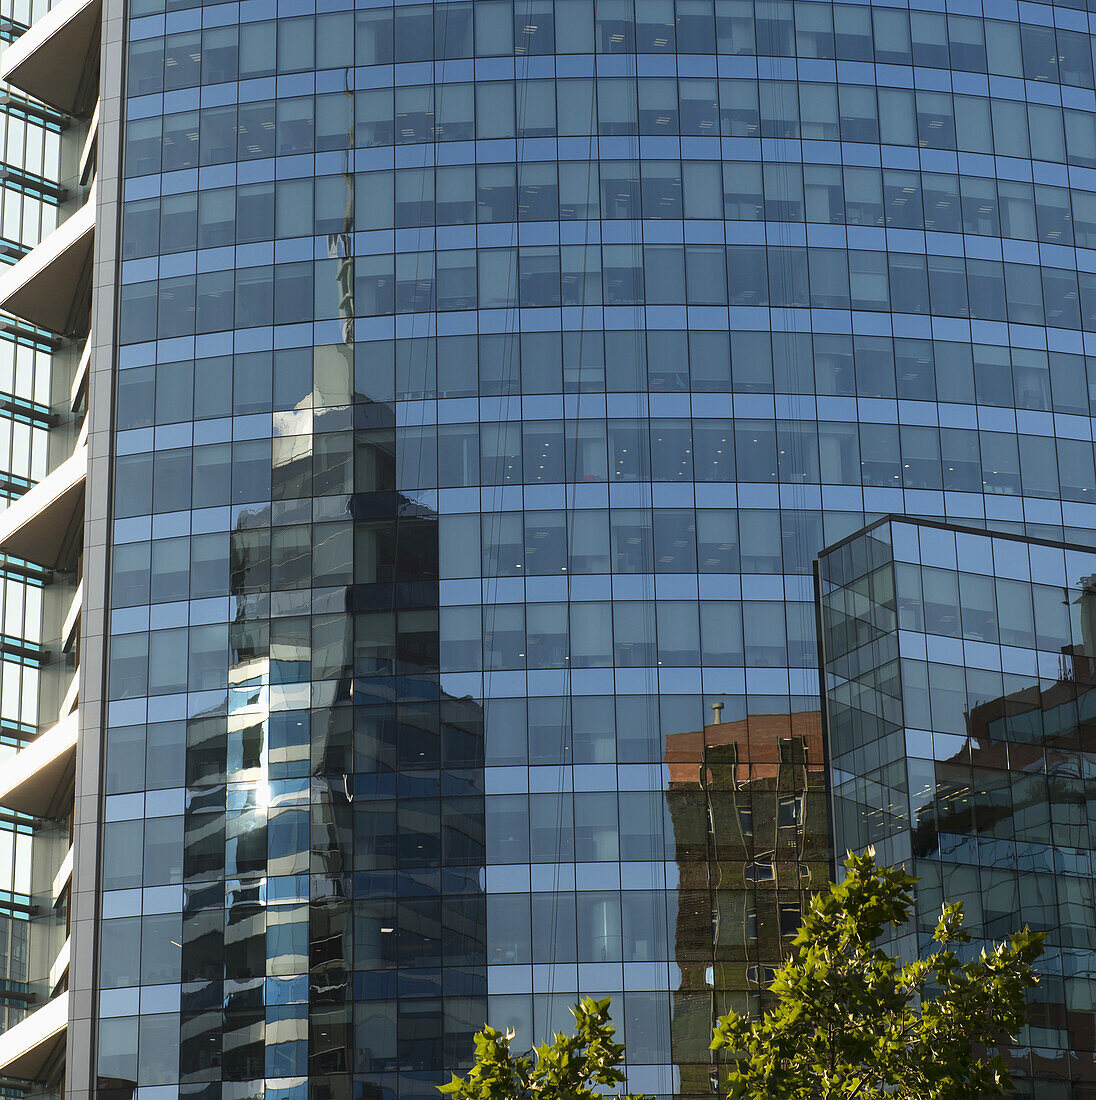 Skyscrapers Reflected In The Glass Facade Of Another Building; Santiago, Santiago Metropolitan Region, Chile